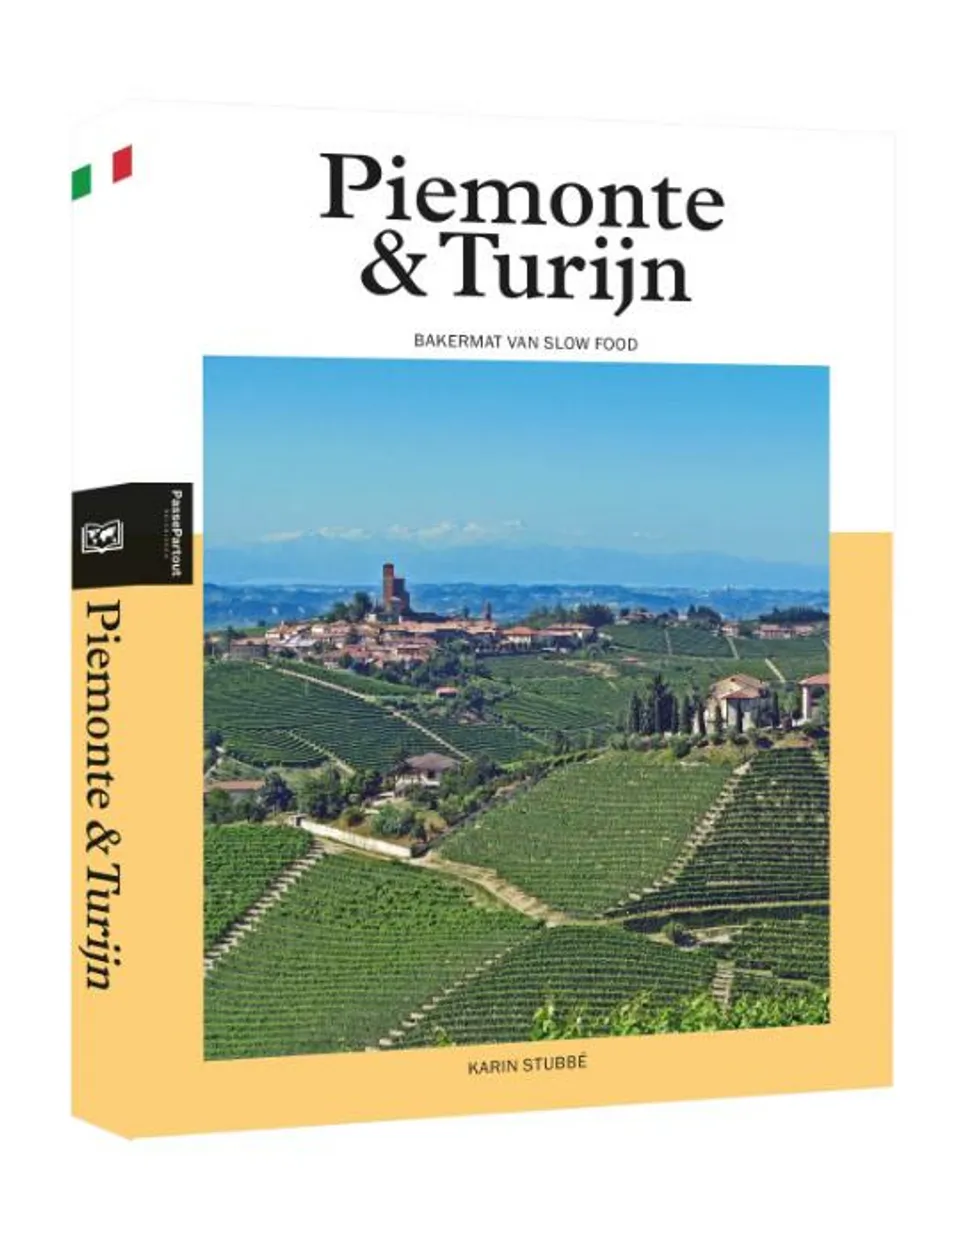 Piemonte & Turijn